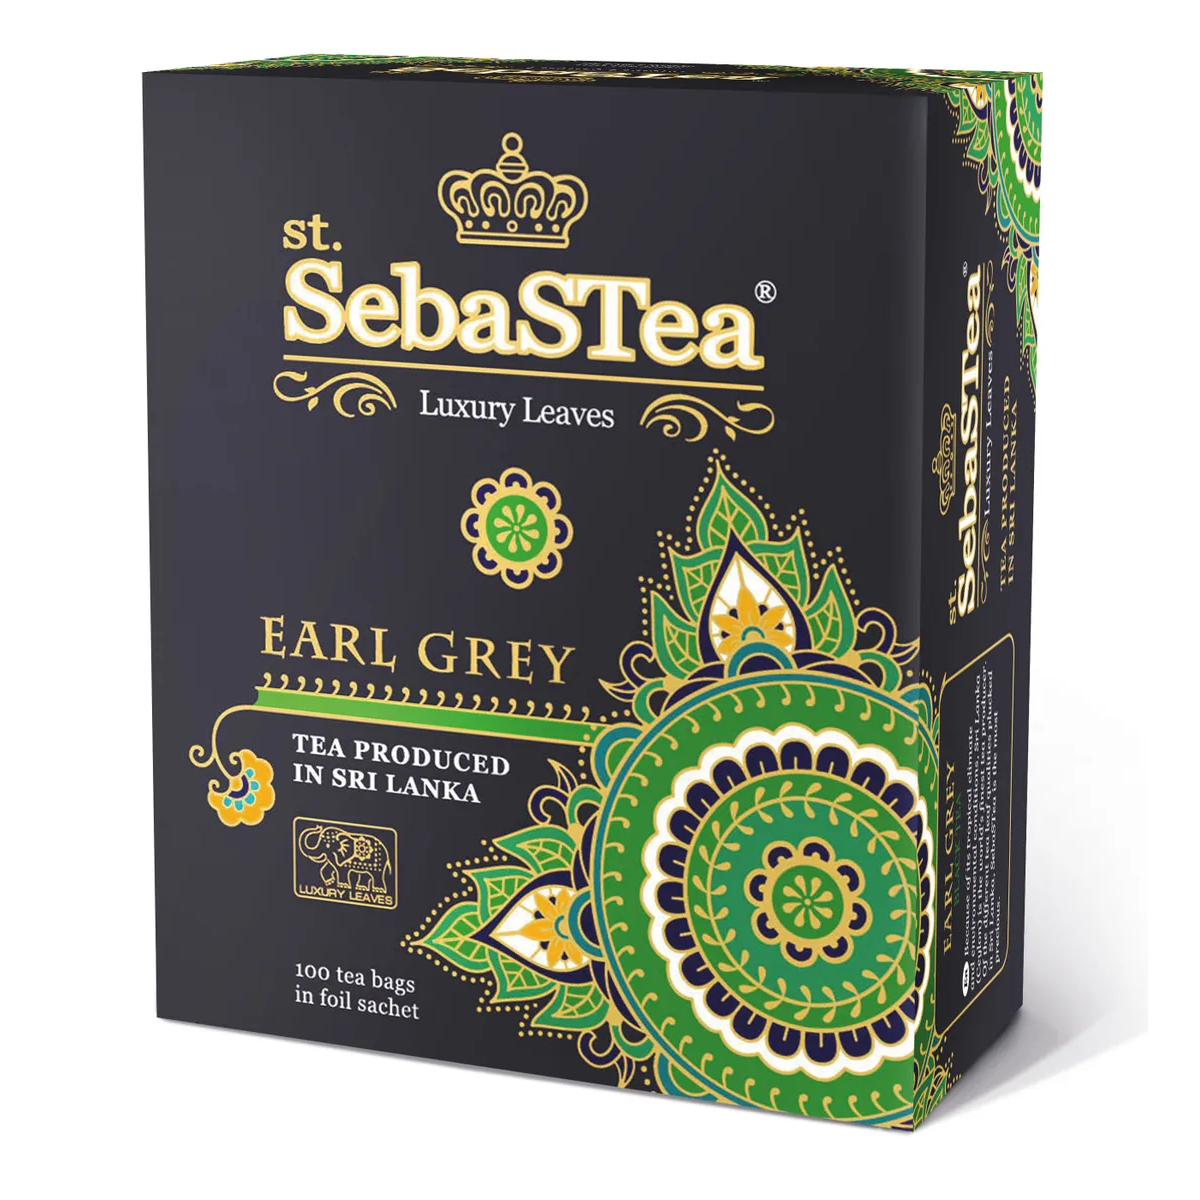 Чай чёрный SebaSTea Earl Grey пакетированный, 100х1.5 г чай черный ароматизированный newby earl grey 50г 25шт пакетированный